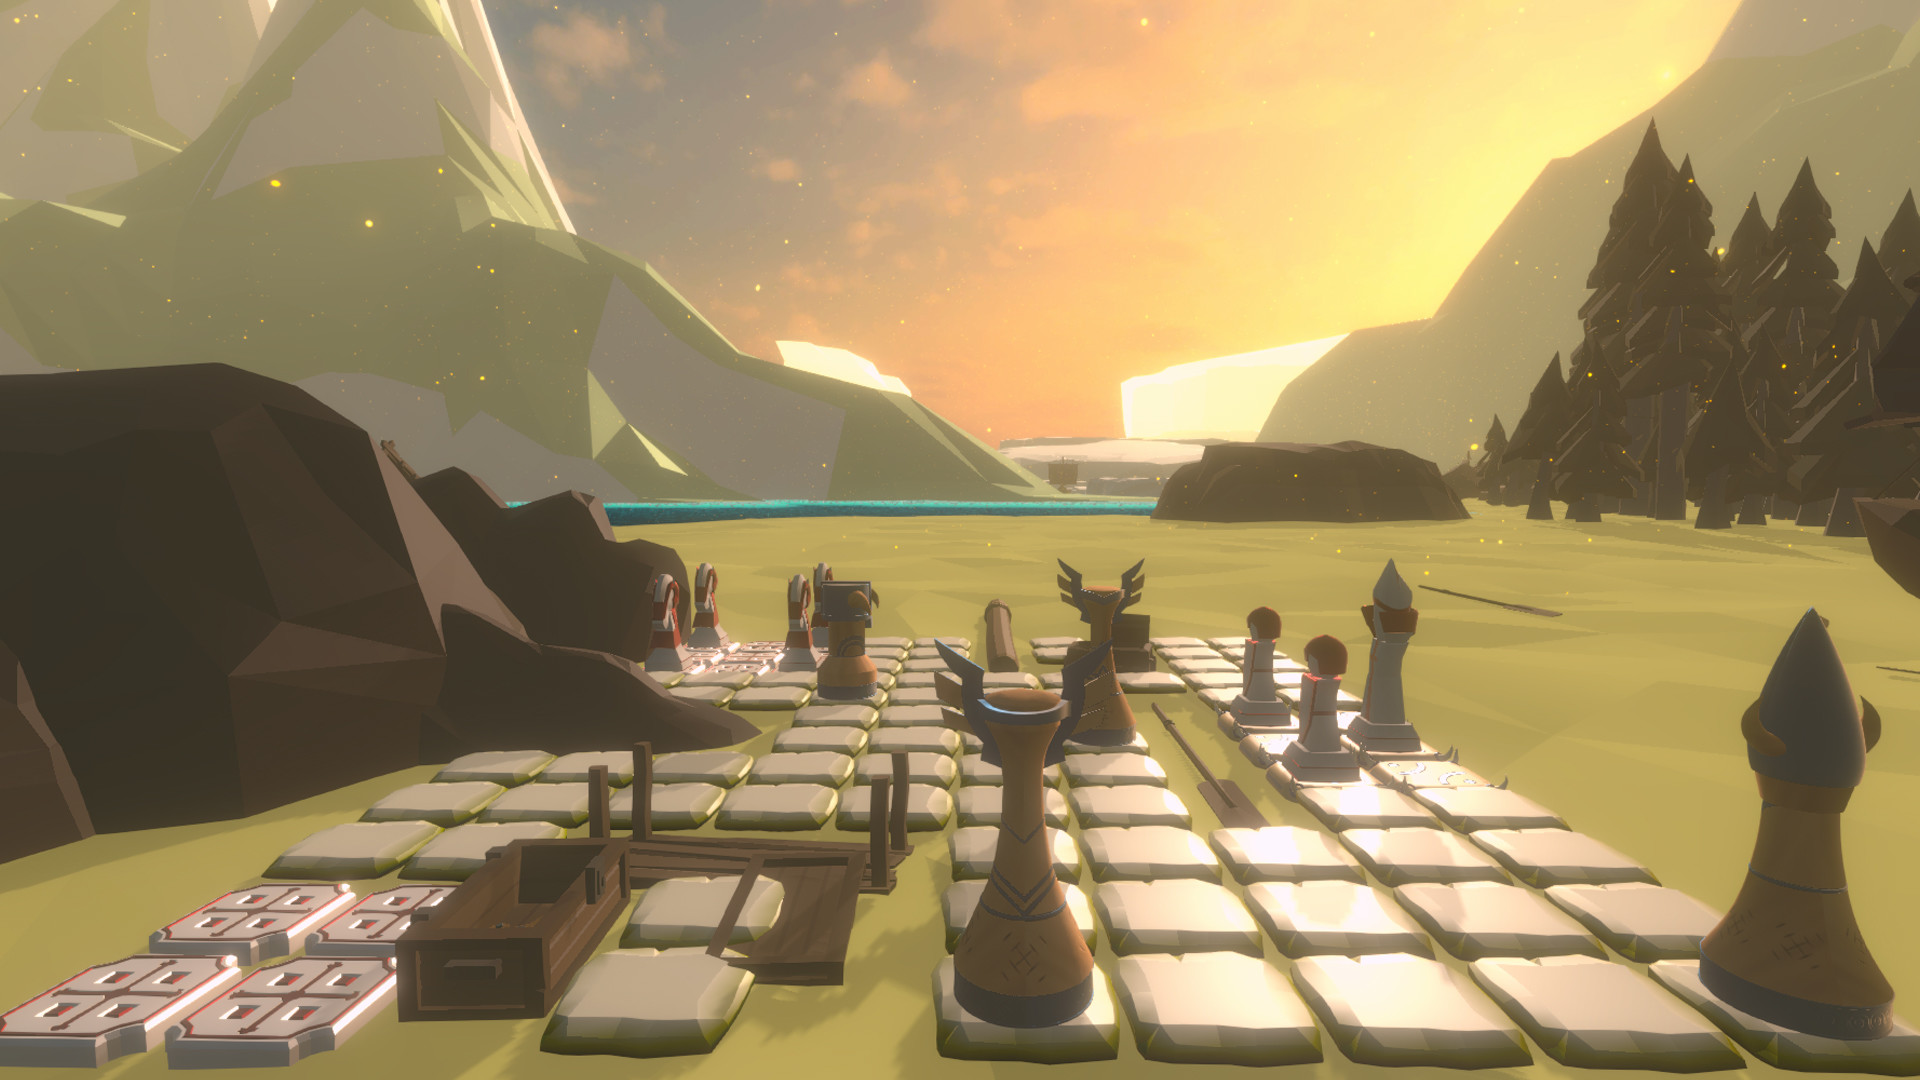 Chess Knights: Viking Lands - Metacritic